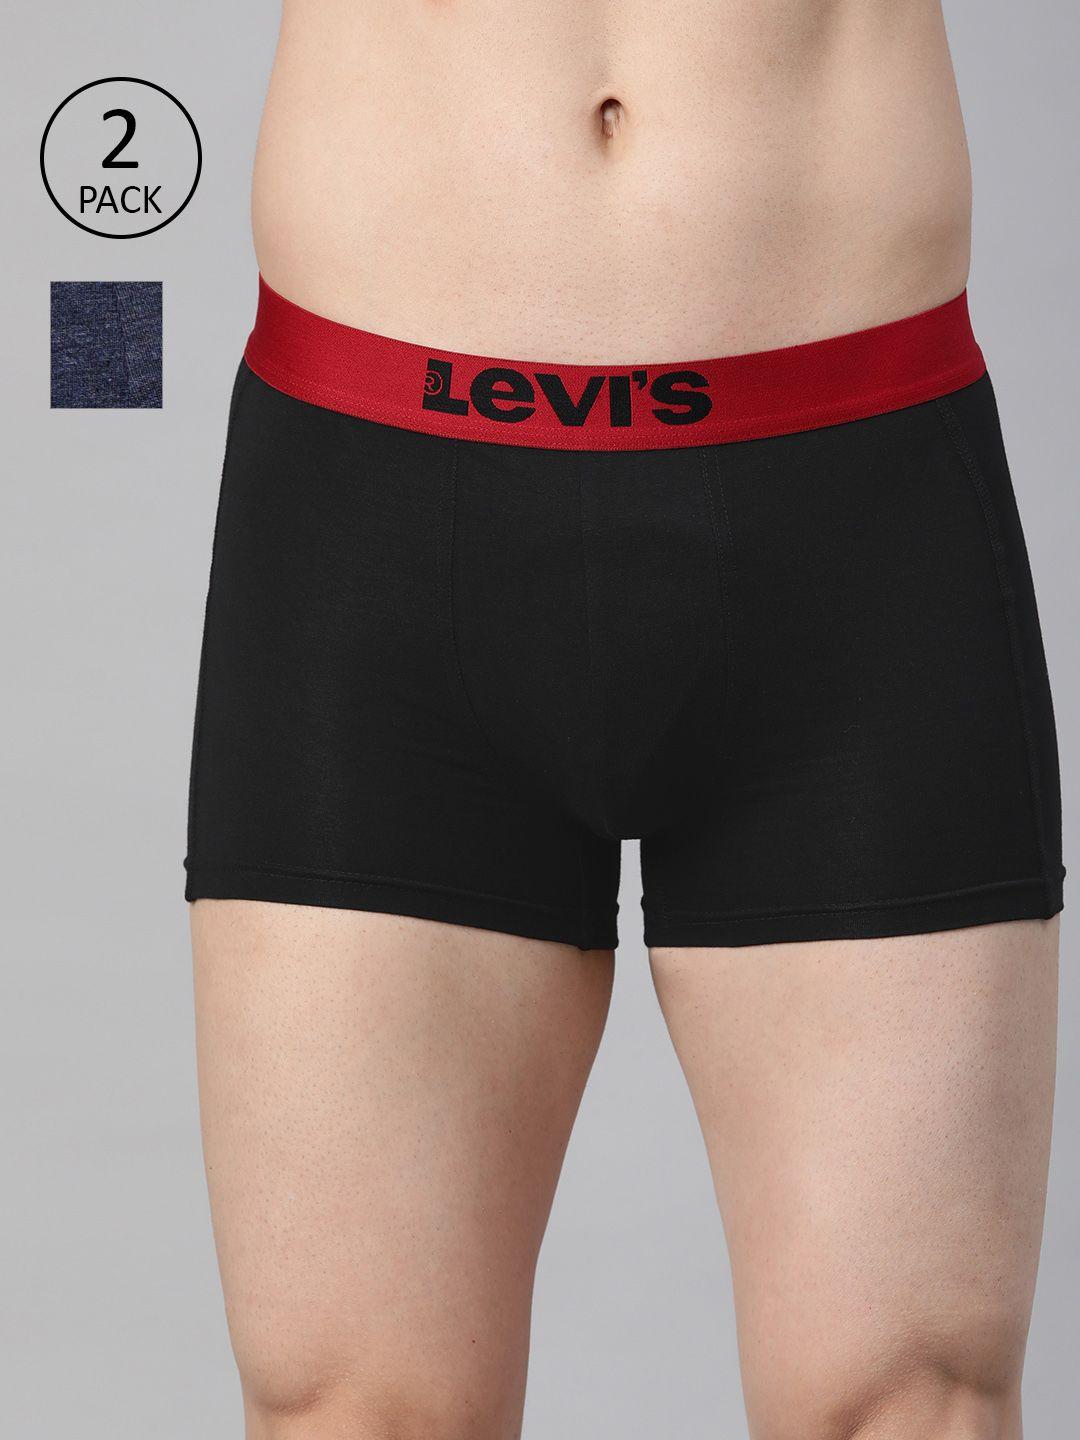 levis-men-pack-of-2-assorted-solid-trunks-#020